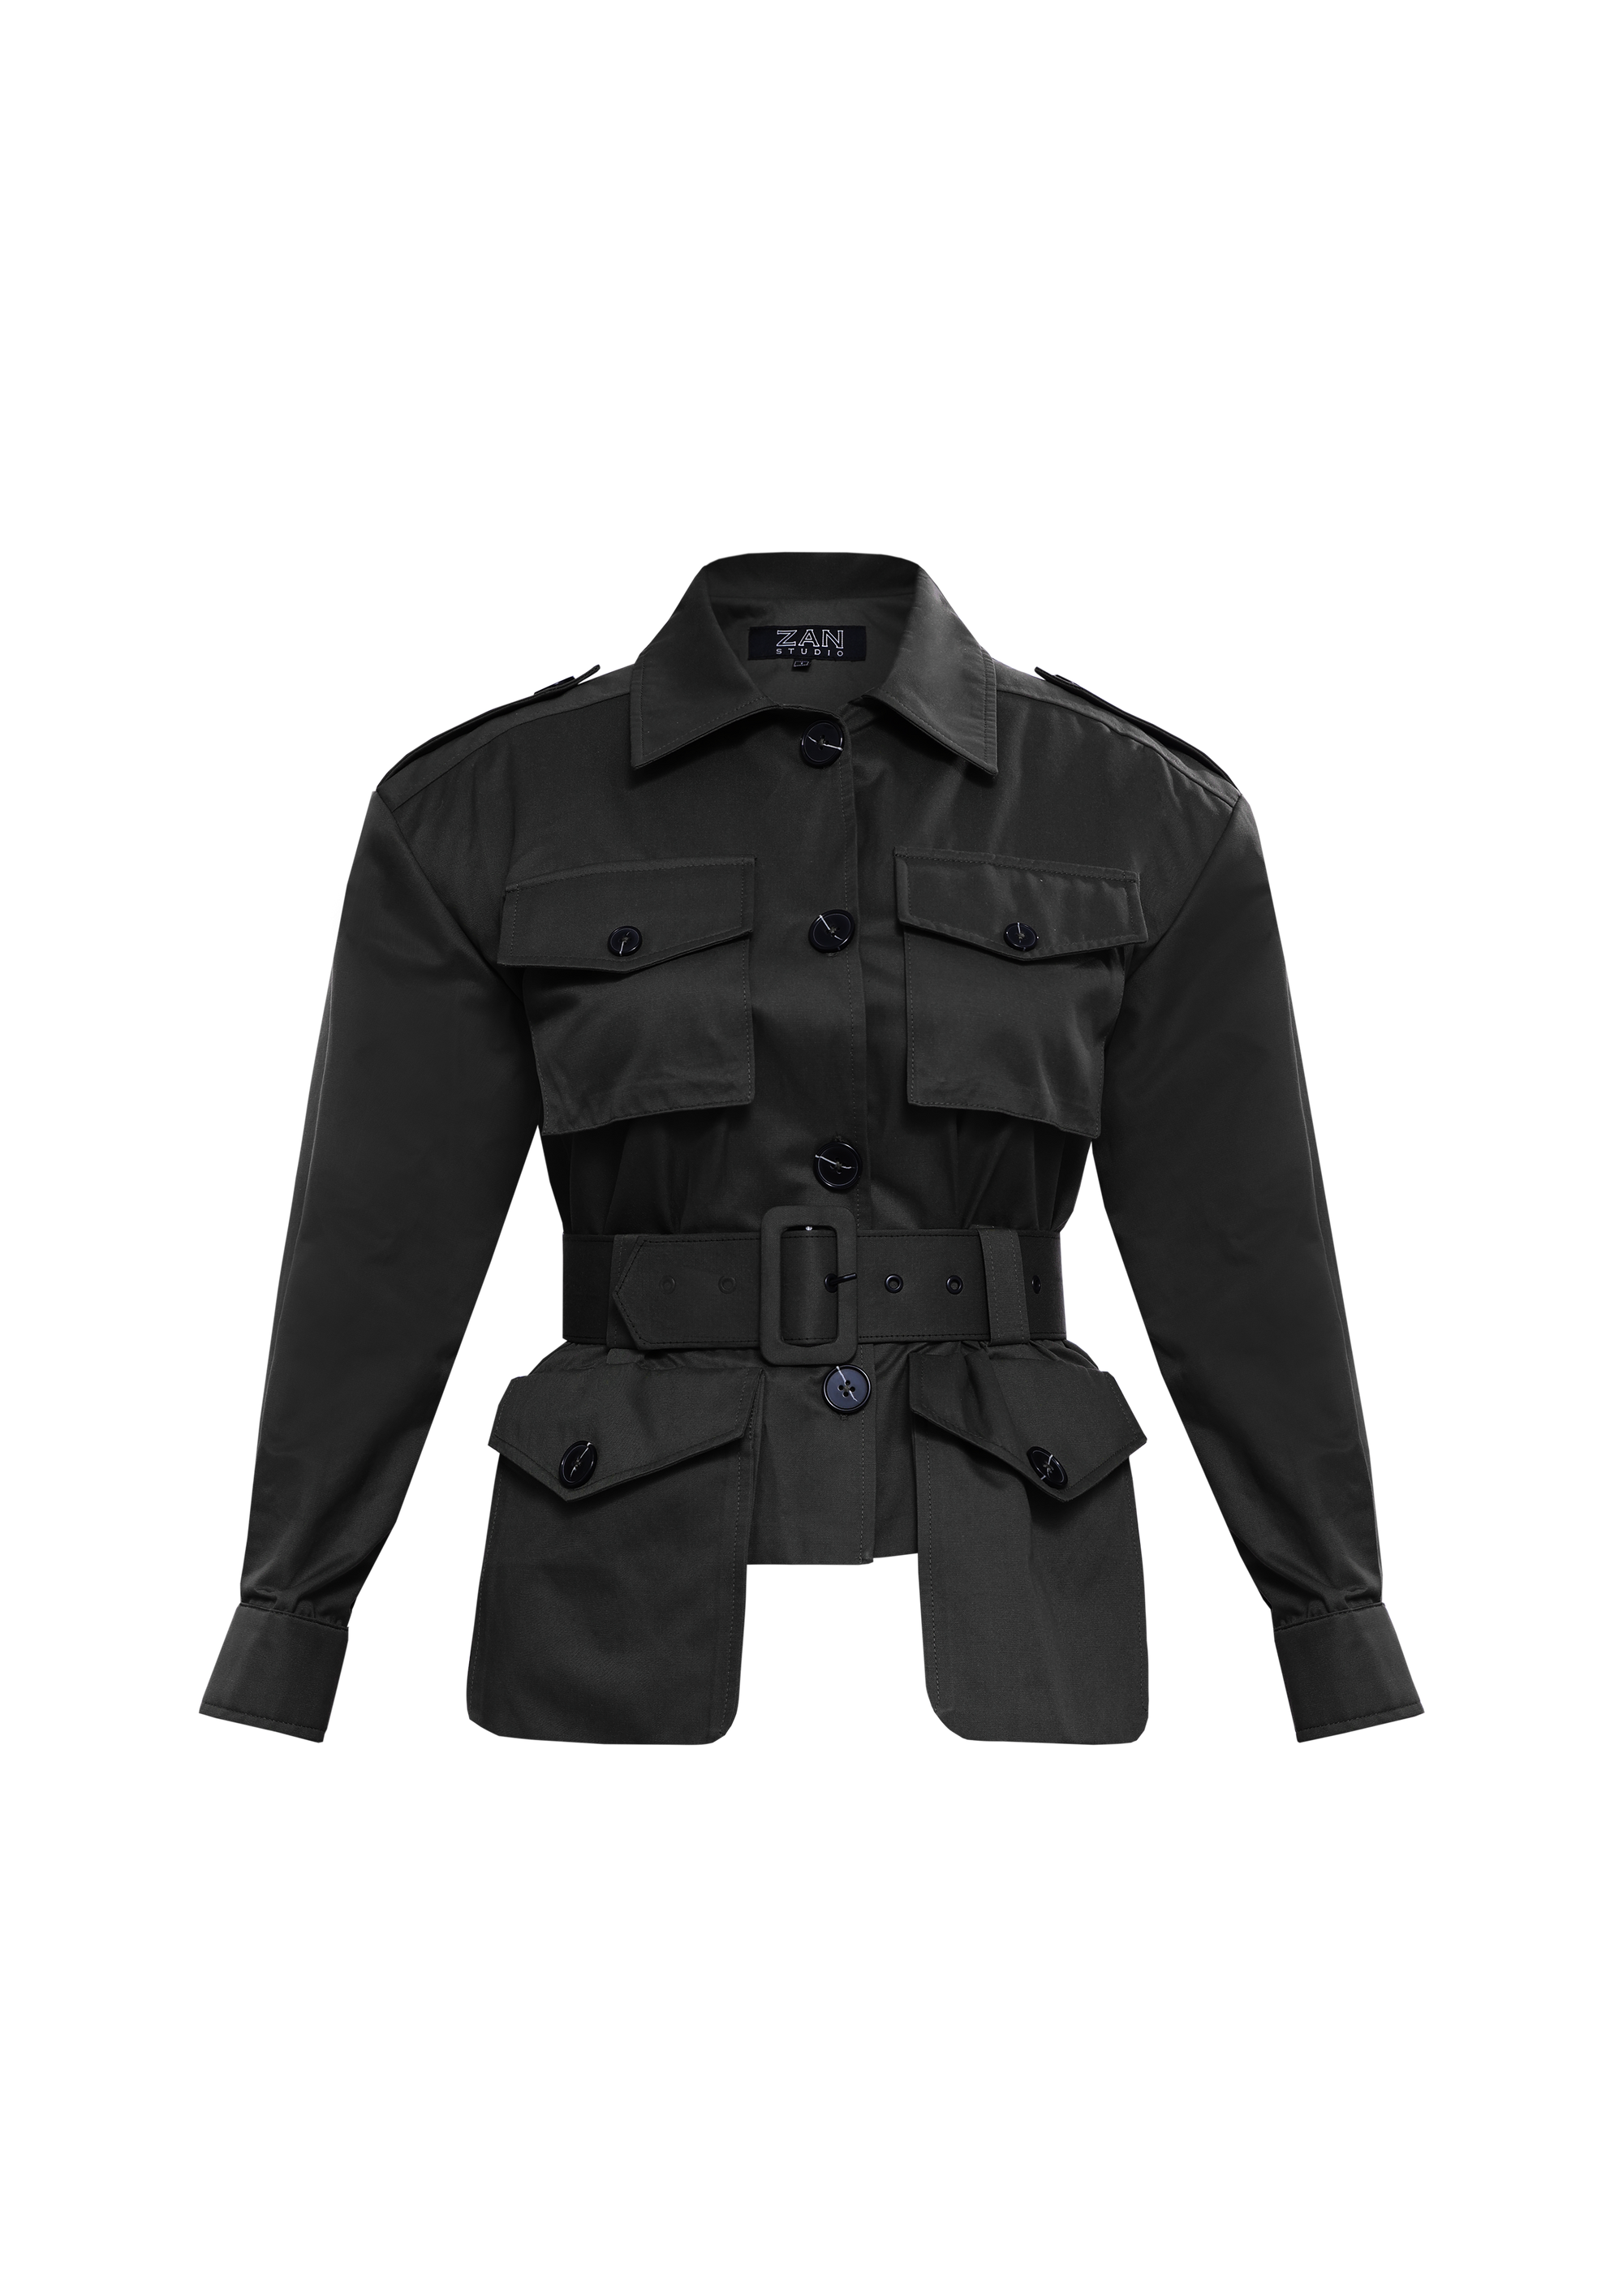 Oversize Army Jacket with Belt